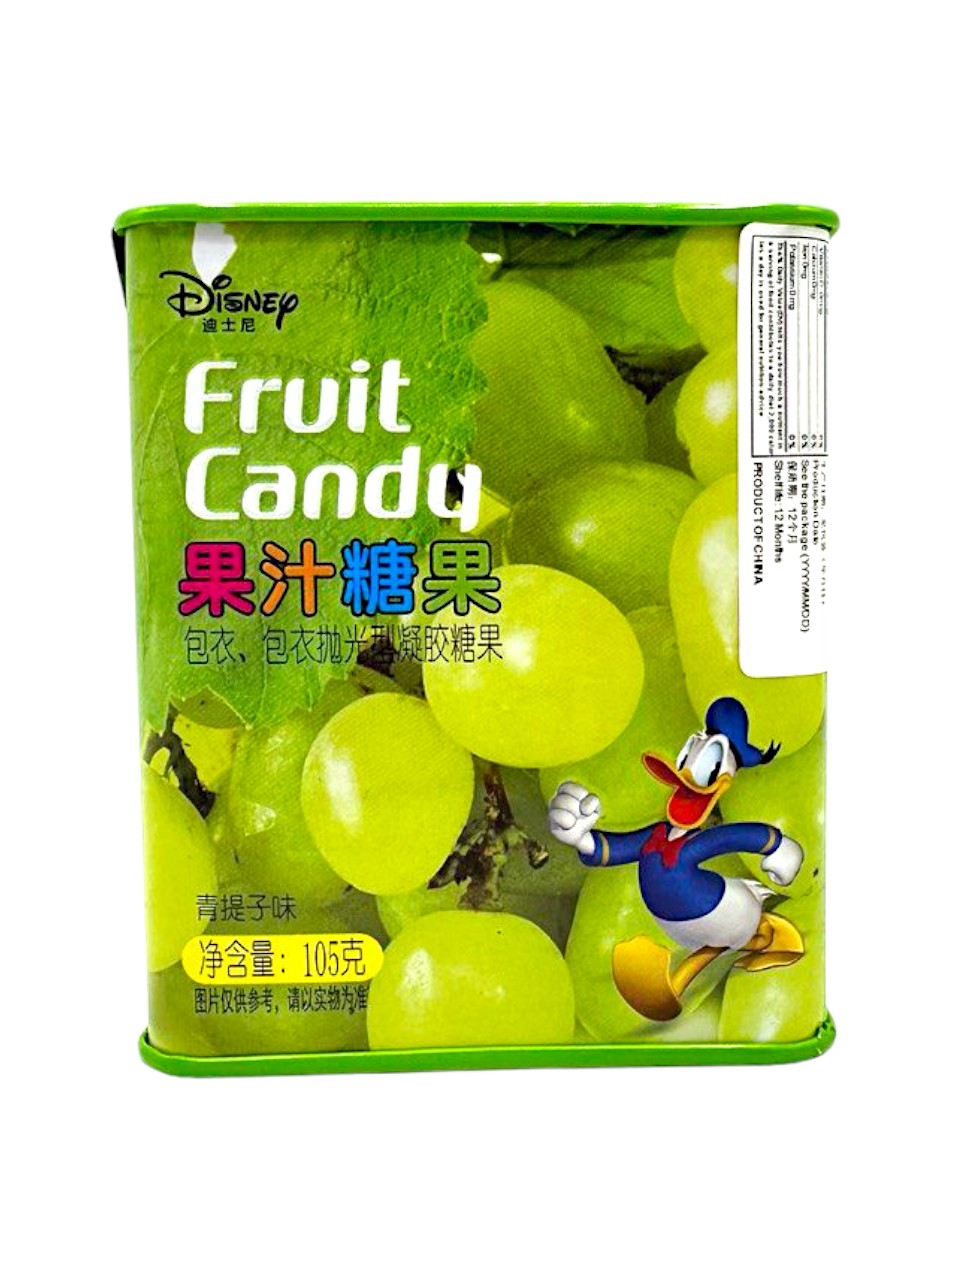 Disney Fruit Candy Drops Raisins (China)